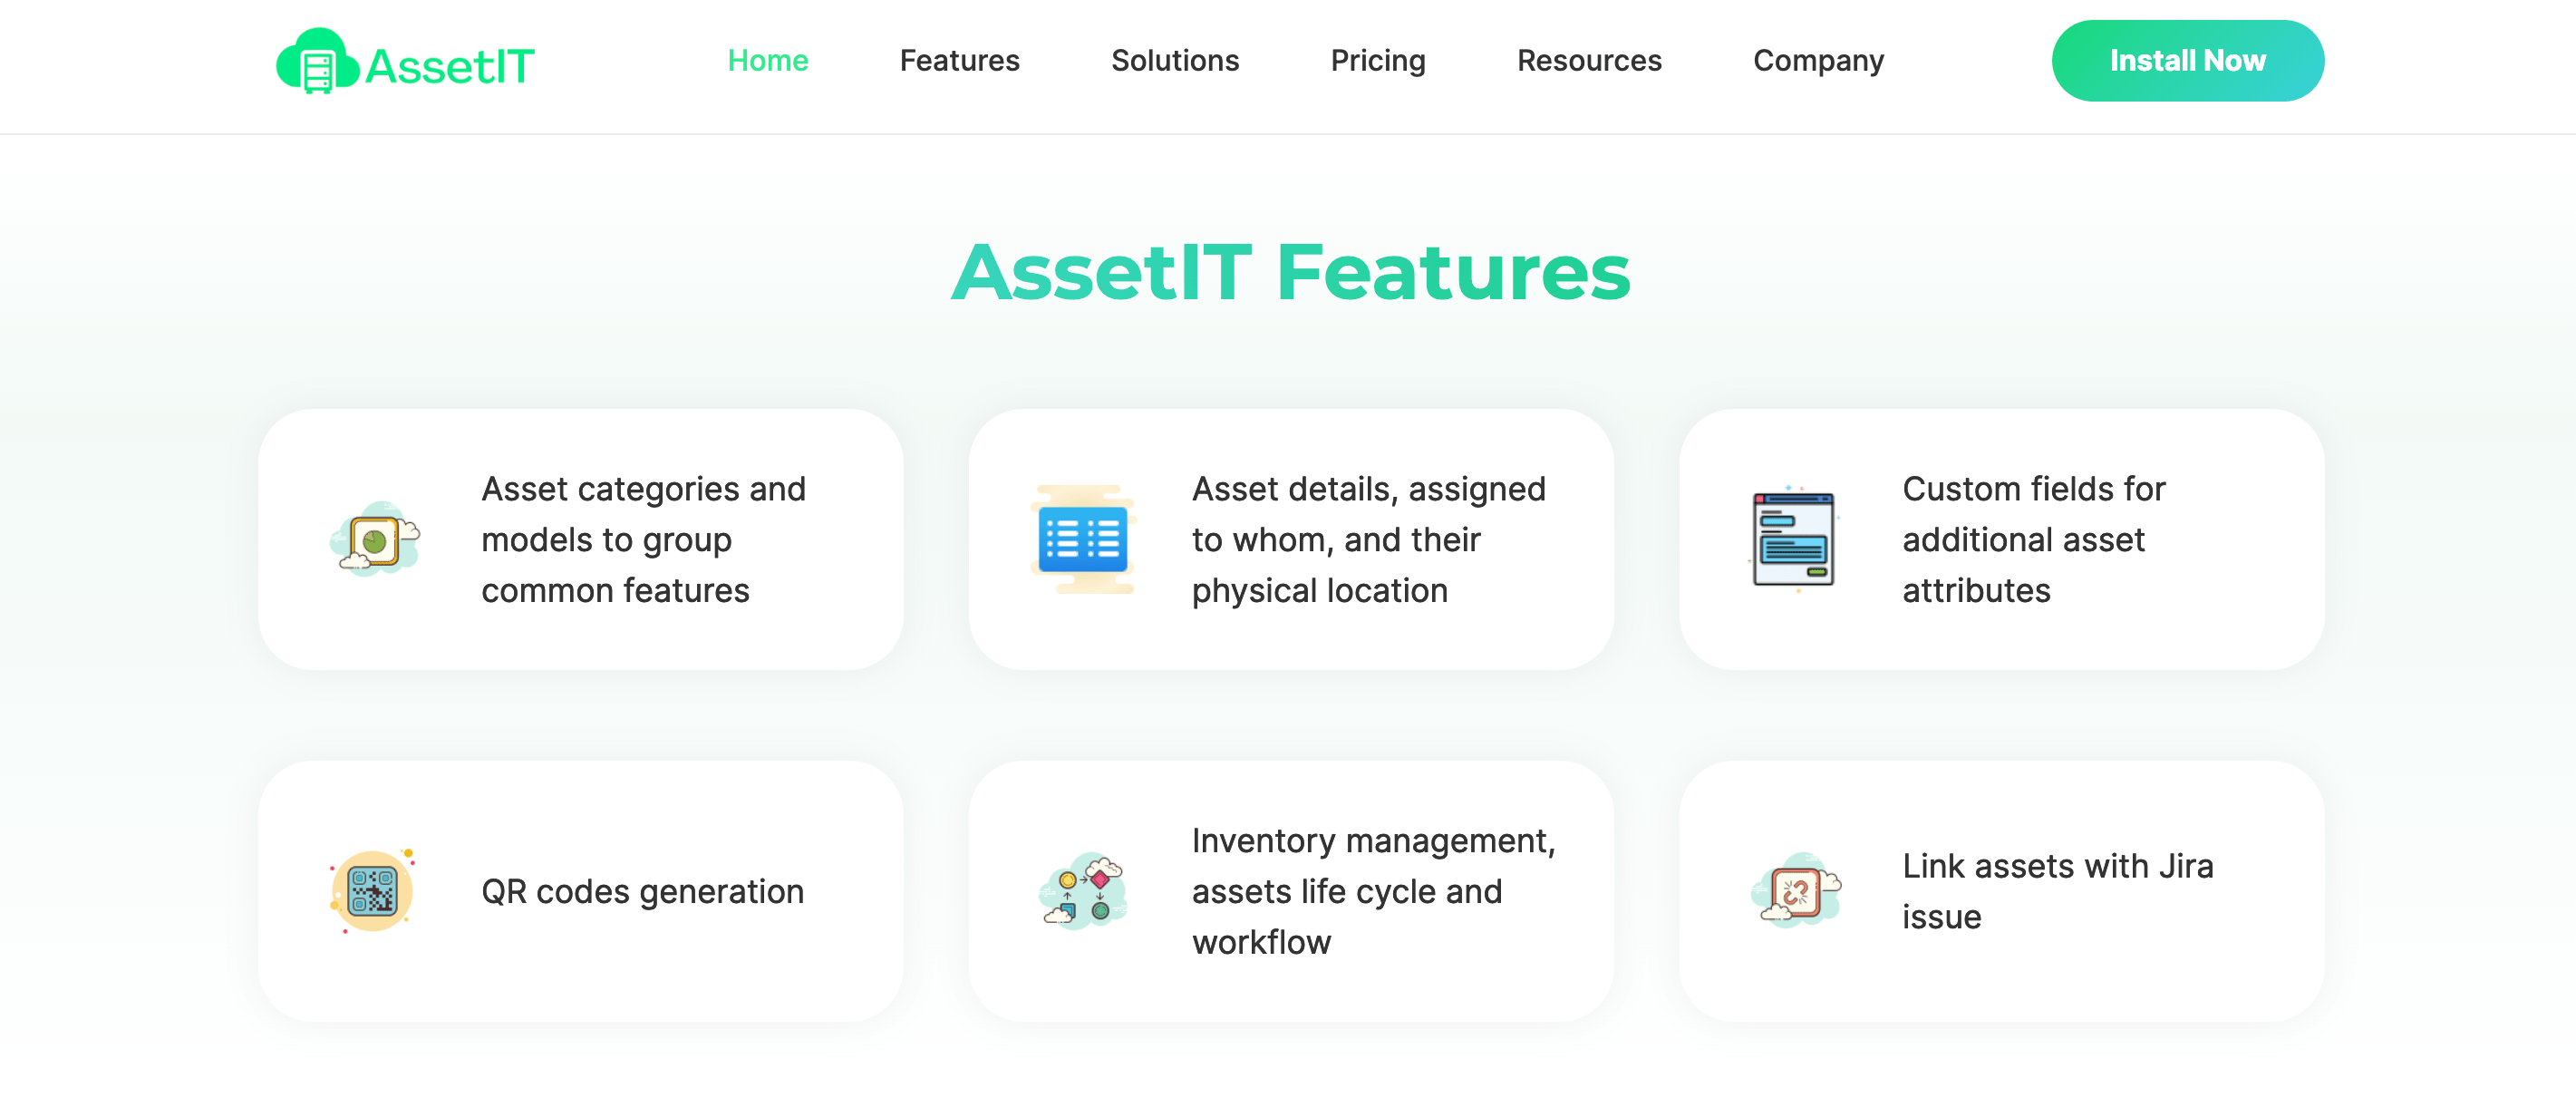 assetIT key features